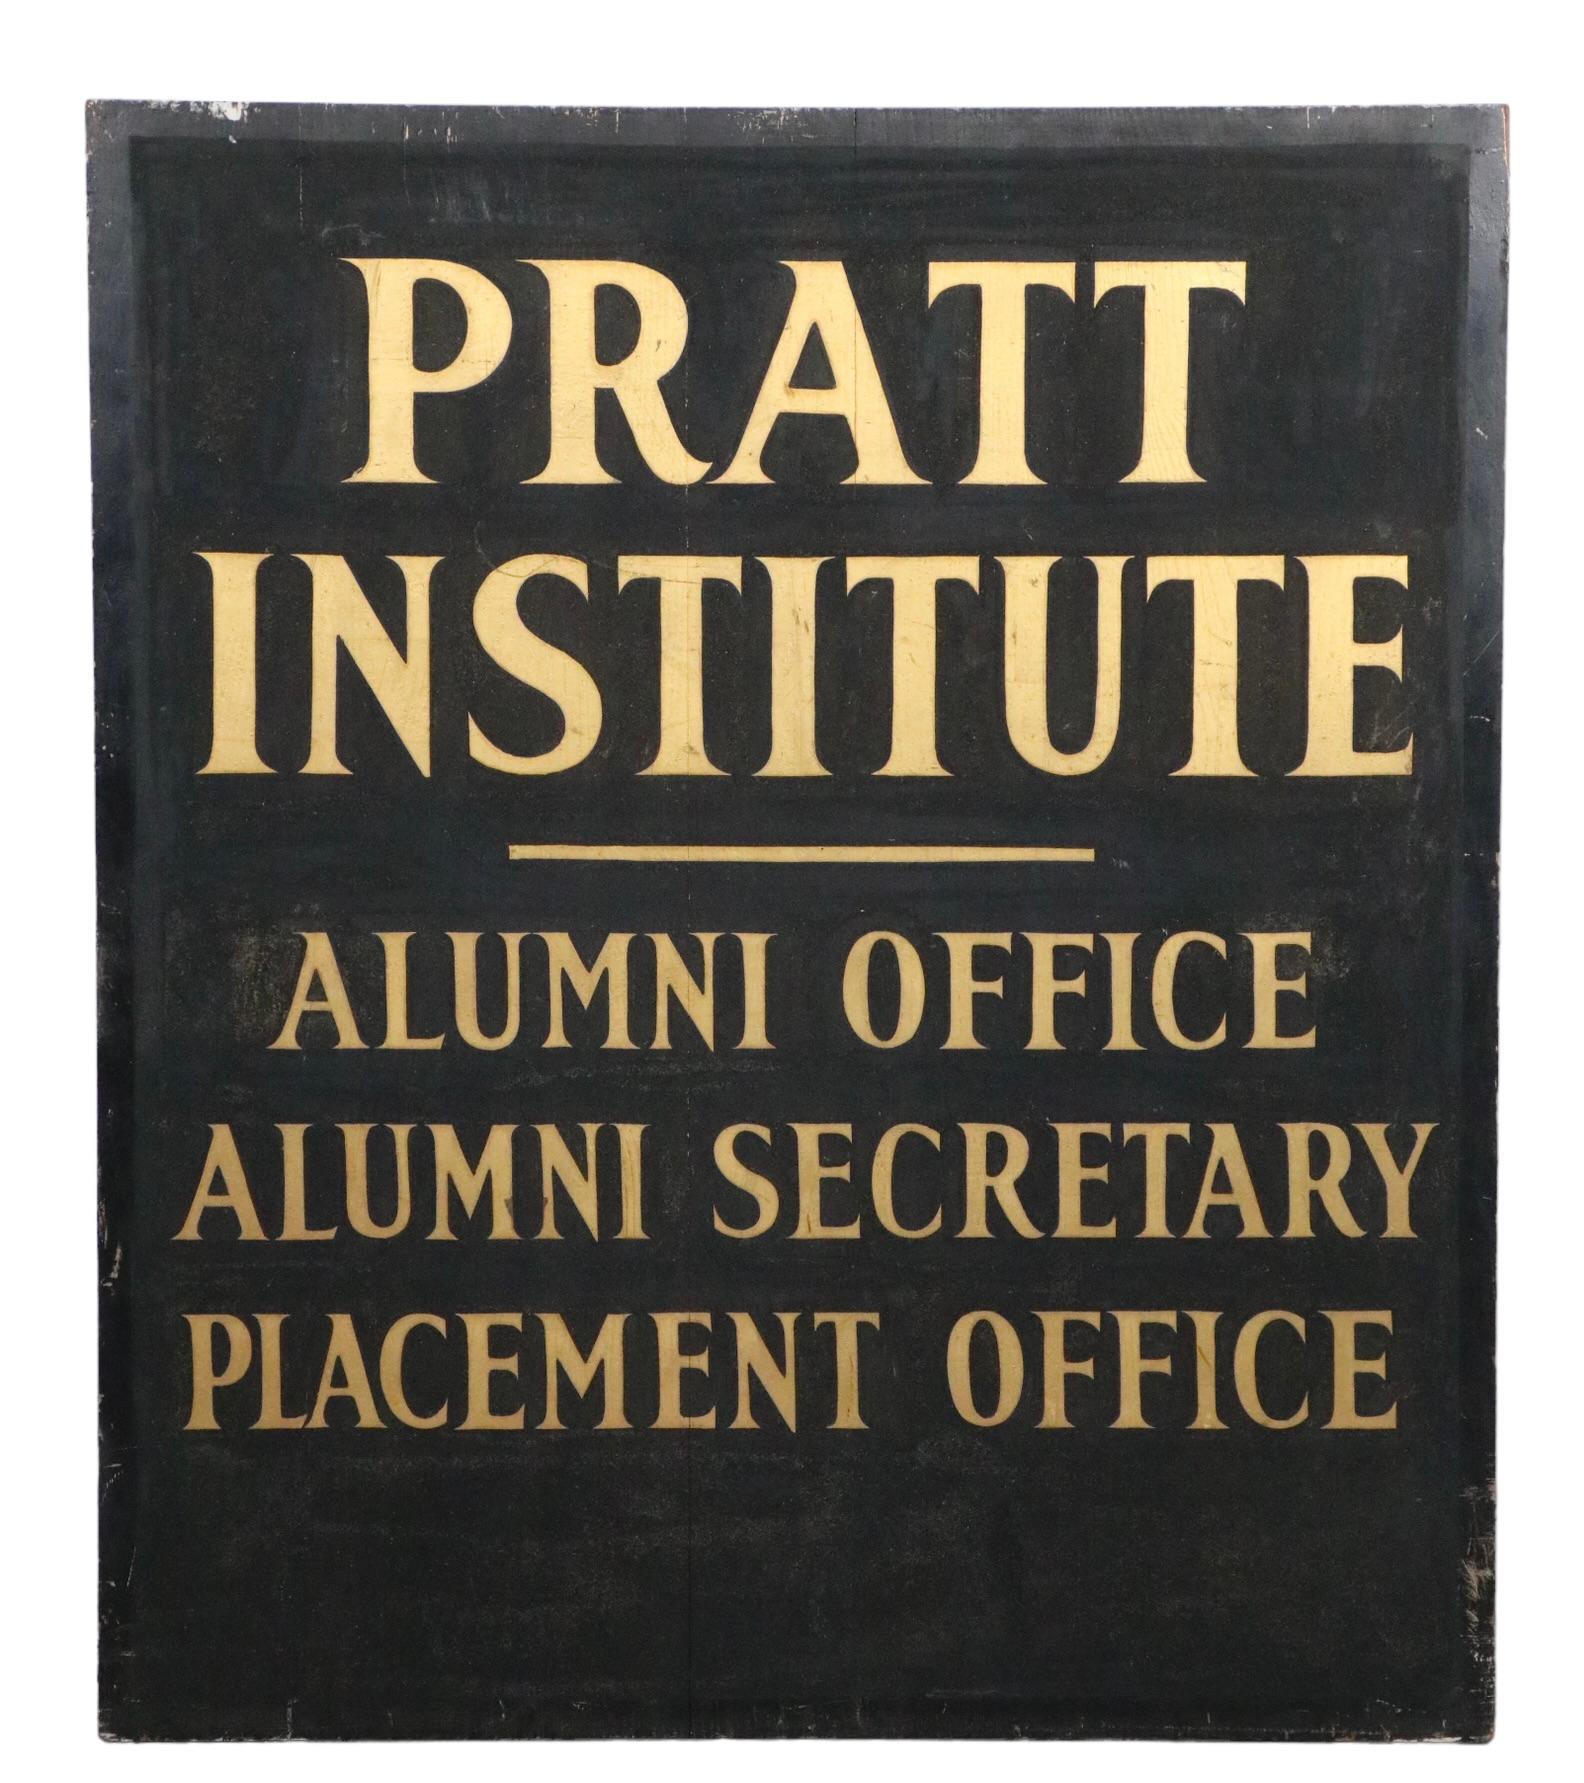 20th Century Antique Wood Sign From Pratt Institute For Sale